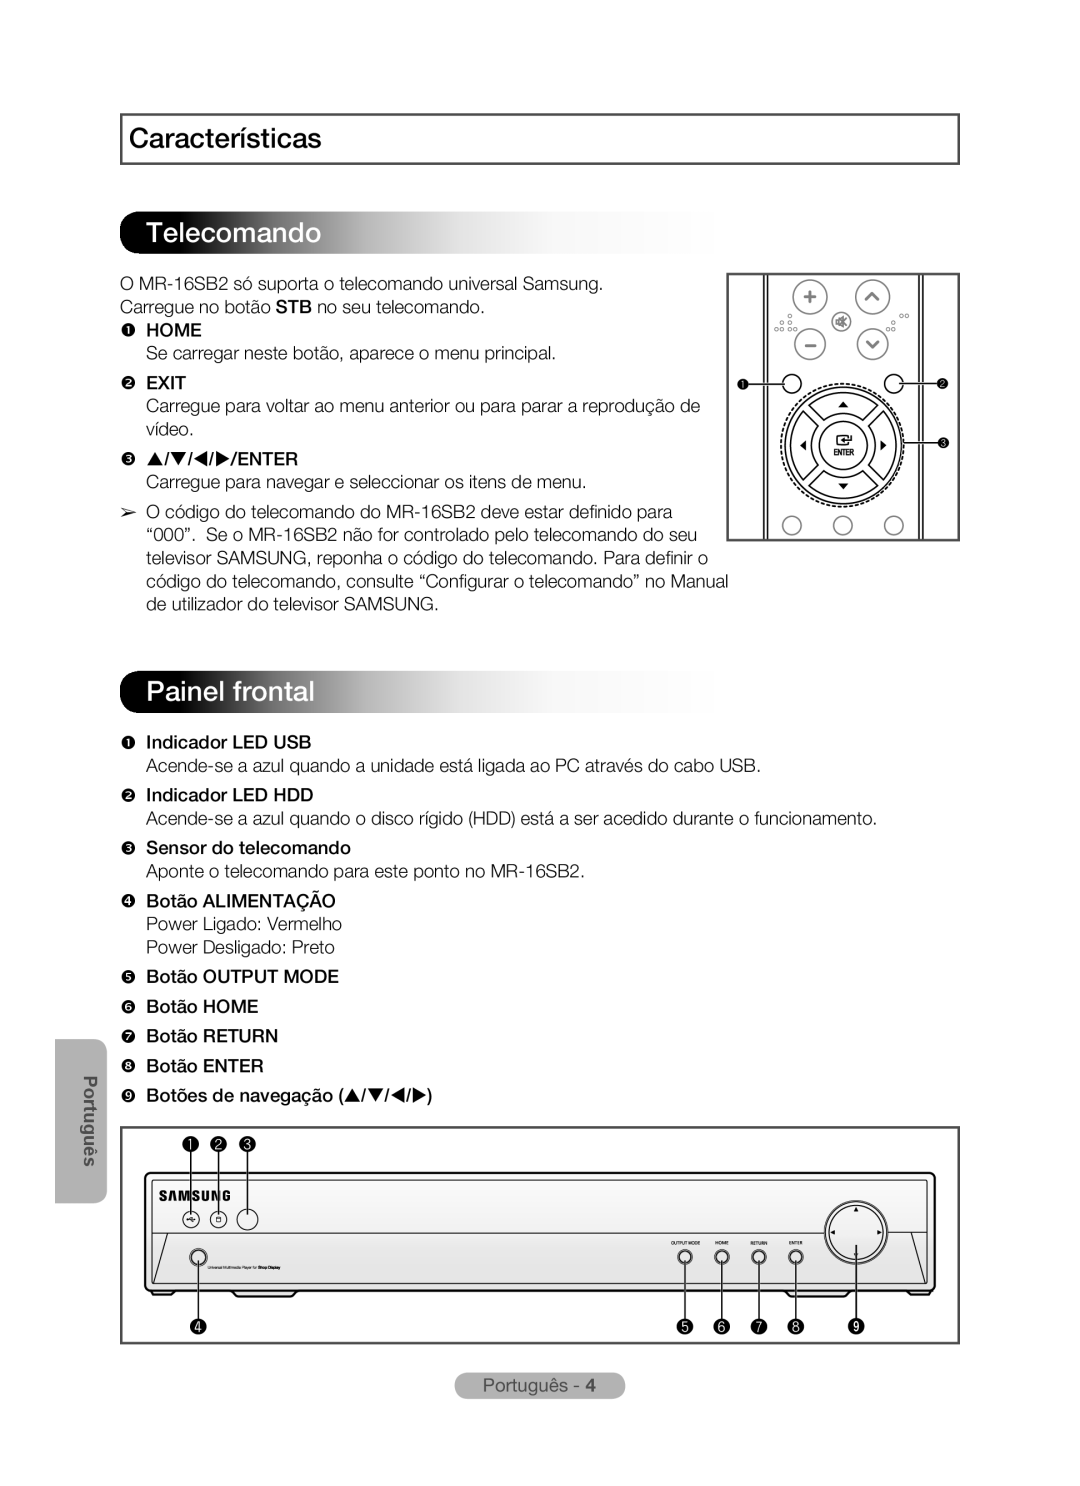 Samsung MR-16SB2 manual Painel frontal, Características, Telecomando, Português 